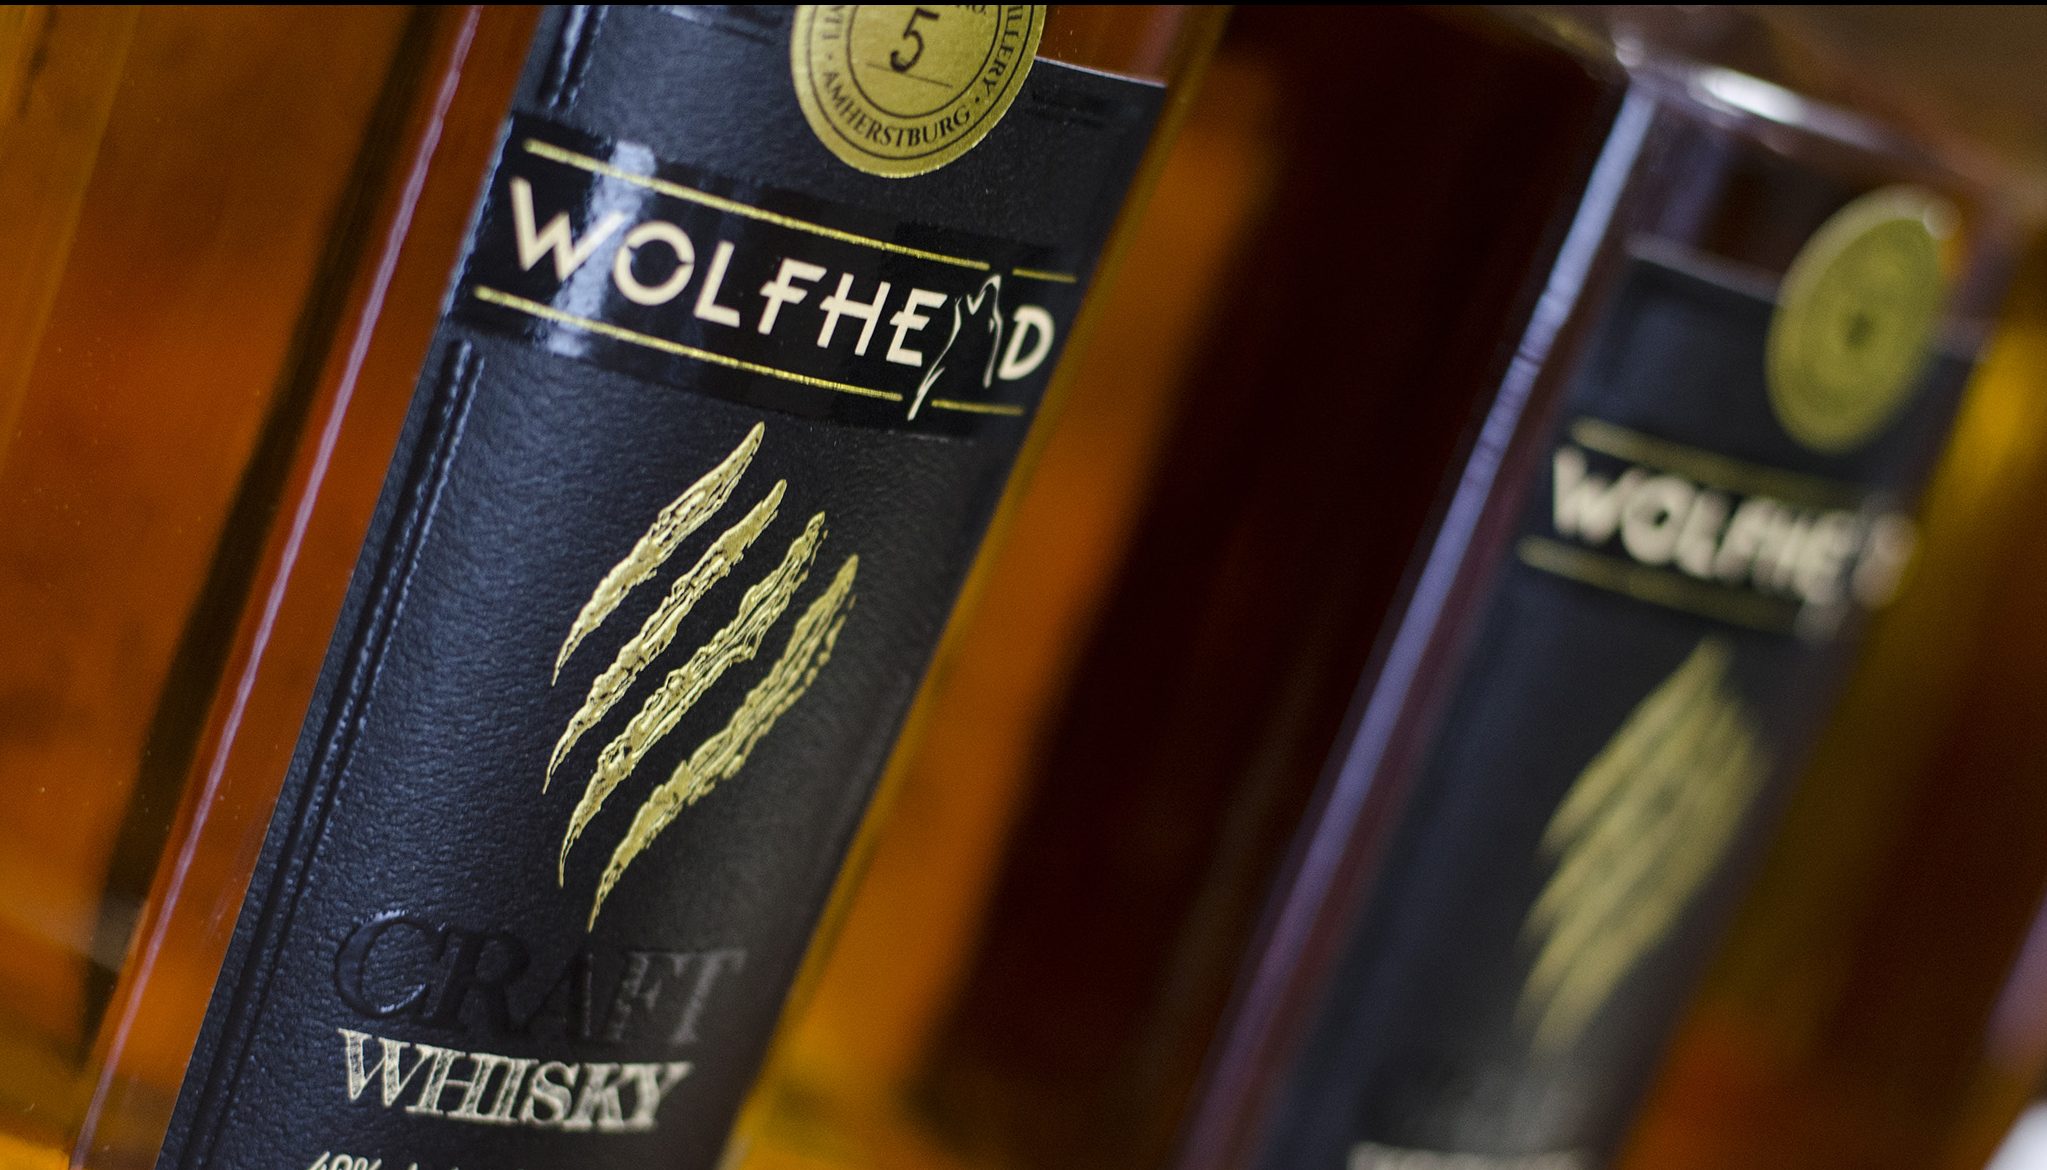 Wolfhead Premium whisky frmo Wolfhead Distillery in Amherstburg, Ontario.